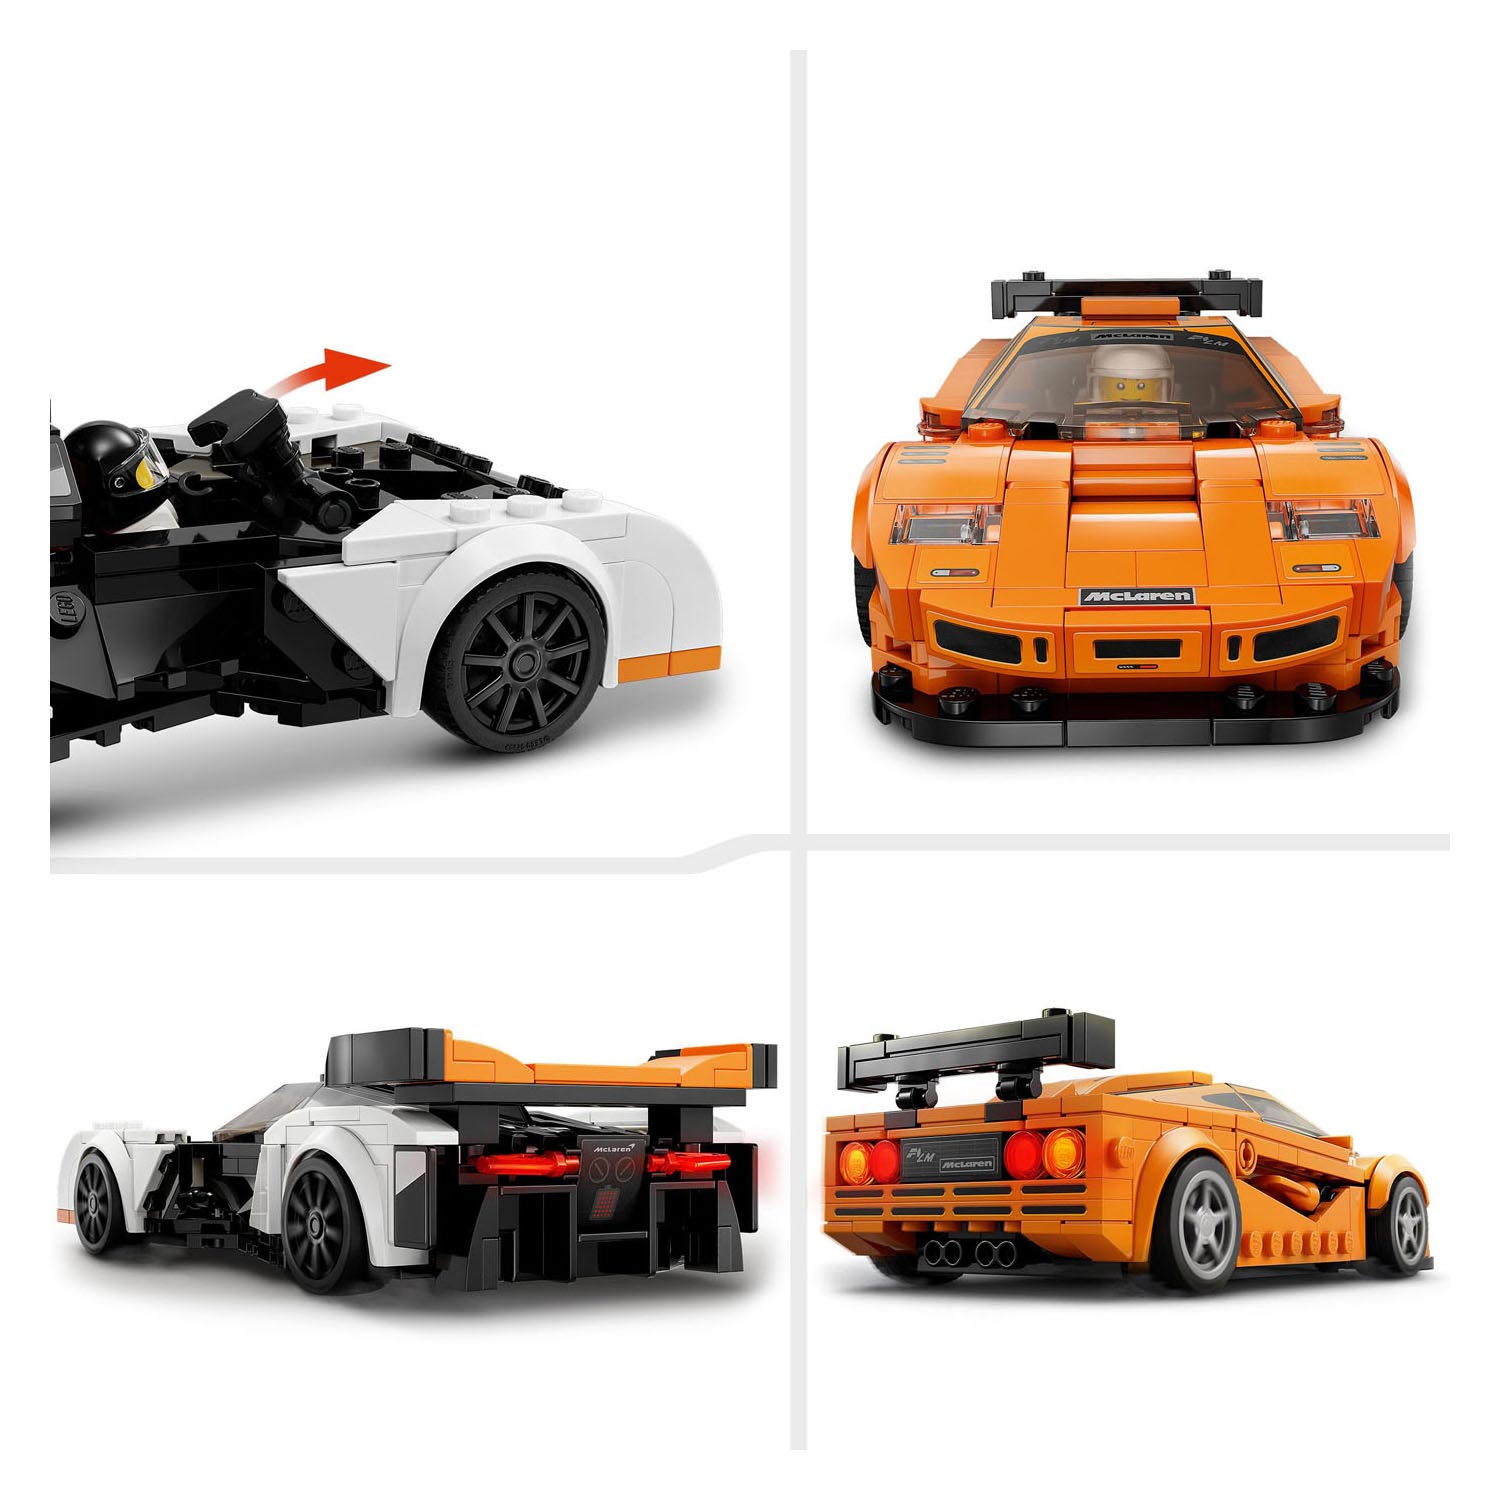 LEGO Speed Champions 76918 McLaren Solus GT & McLaren F1 LM